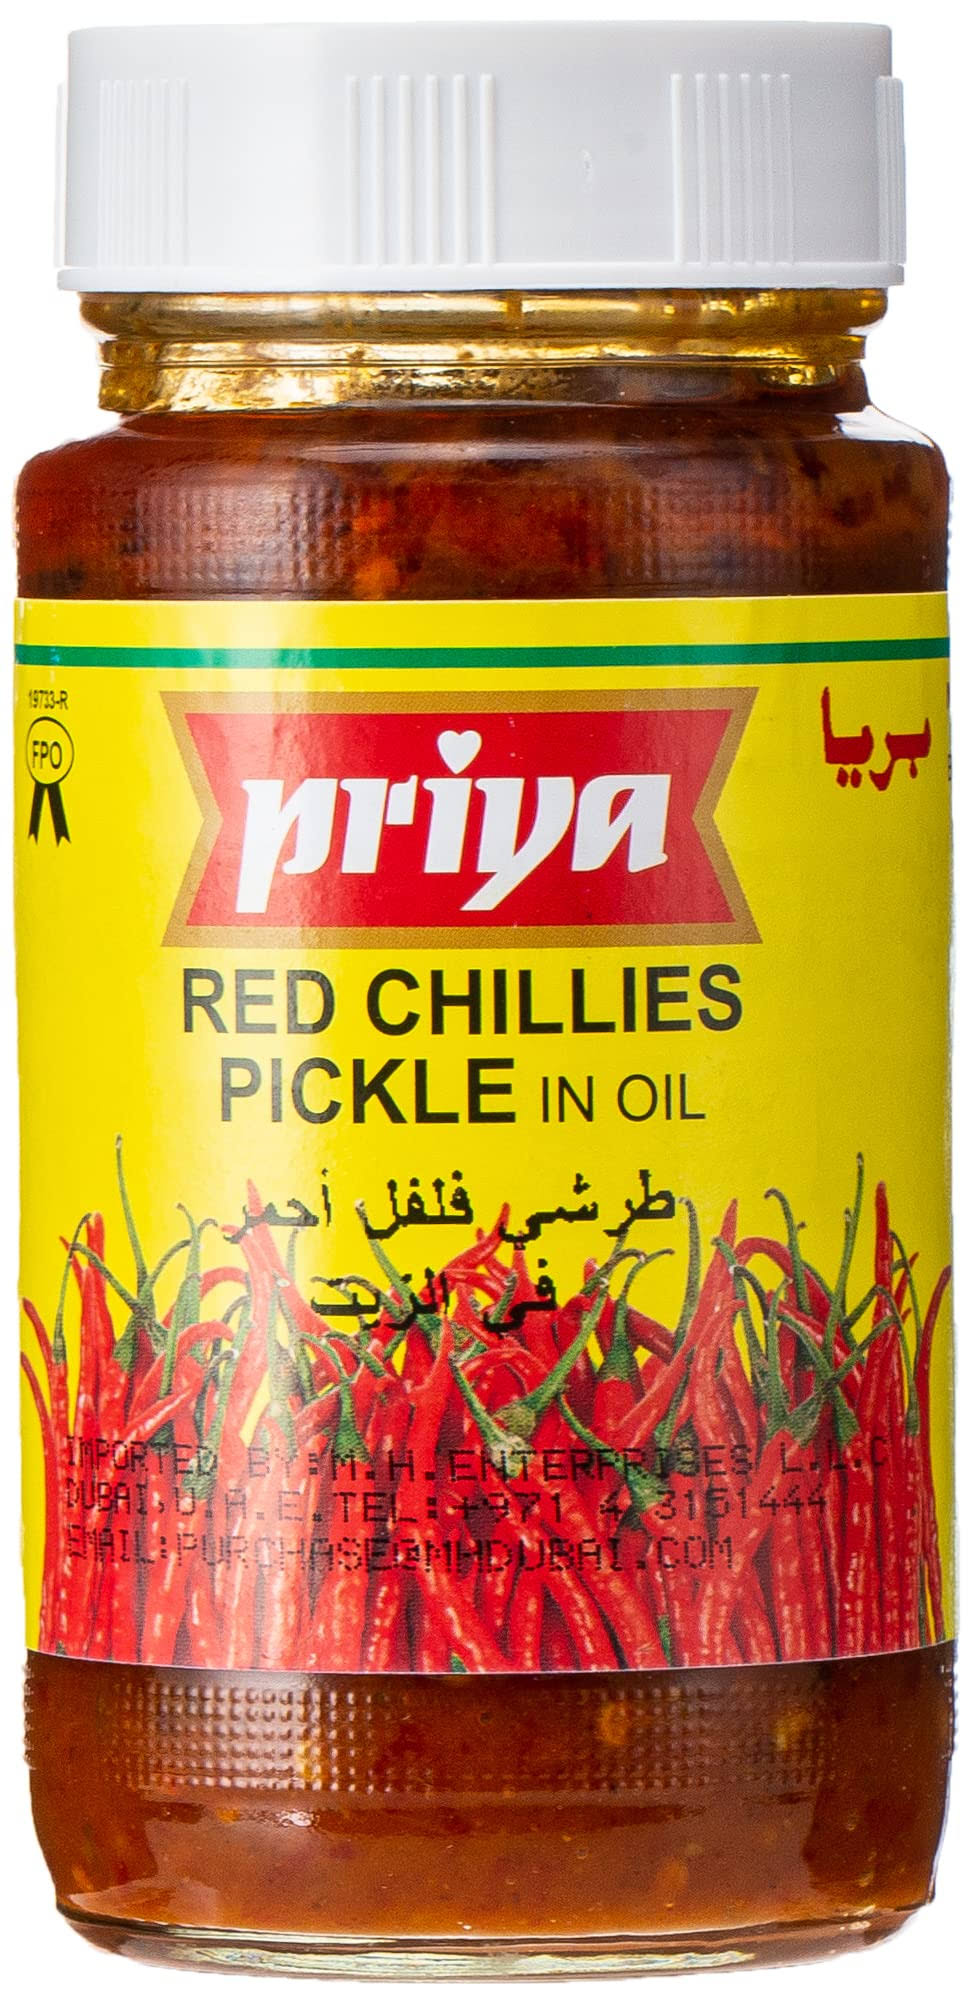 Priya Red Chilli Pickle In Oil With Garlic 300g